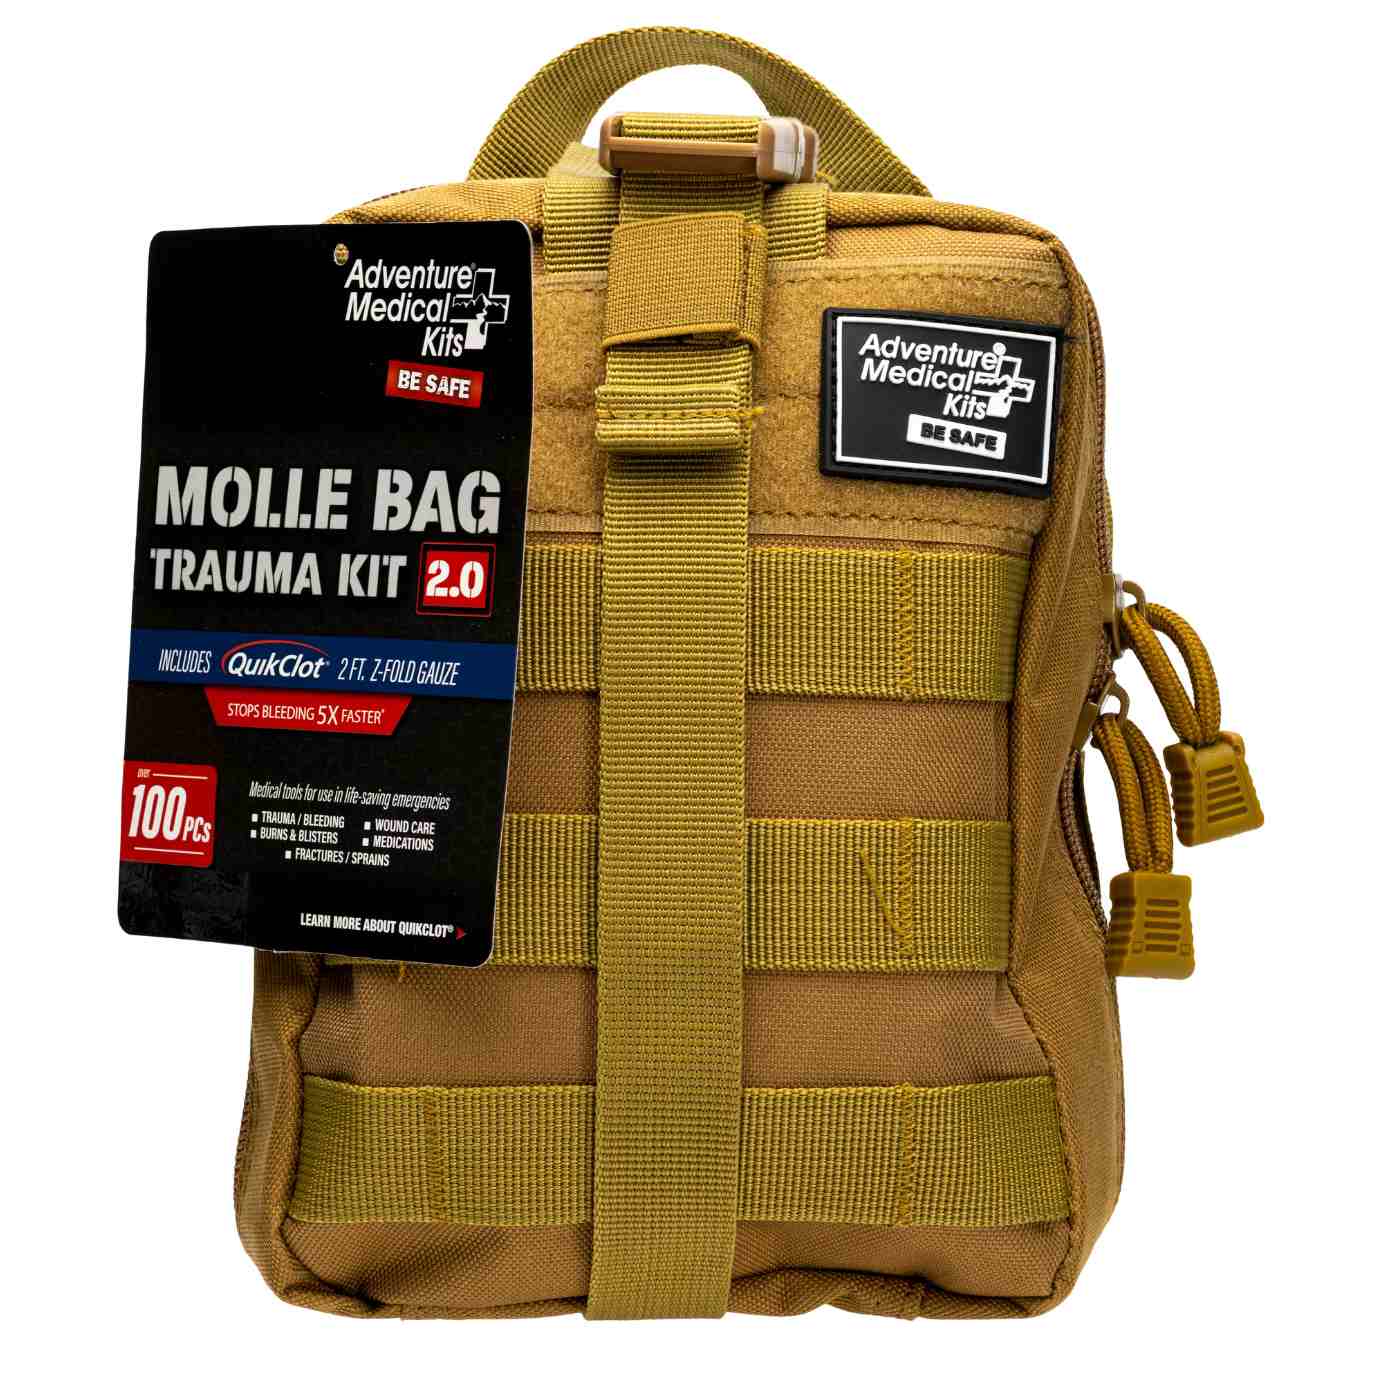 MOLLE Bag Trauma Kit 2.0 - Khaki front